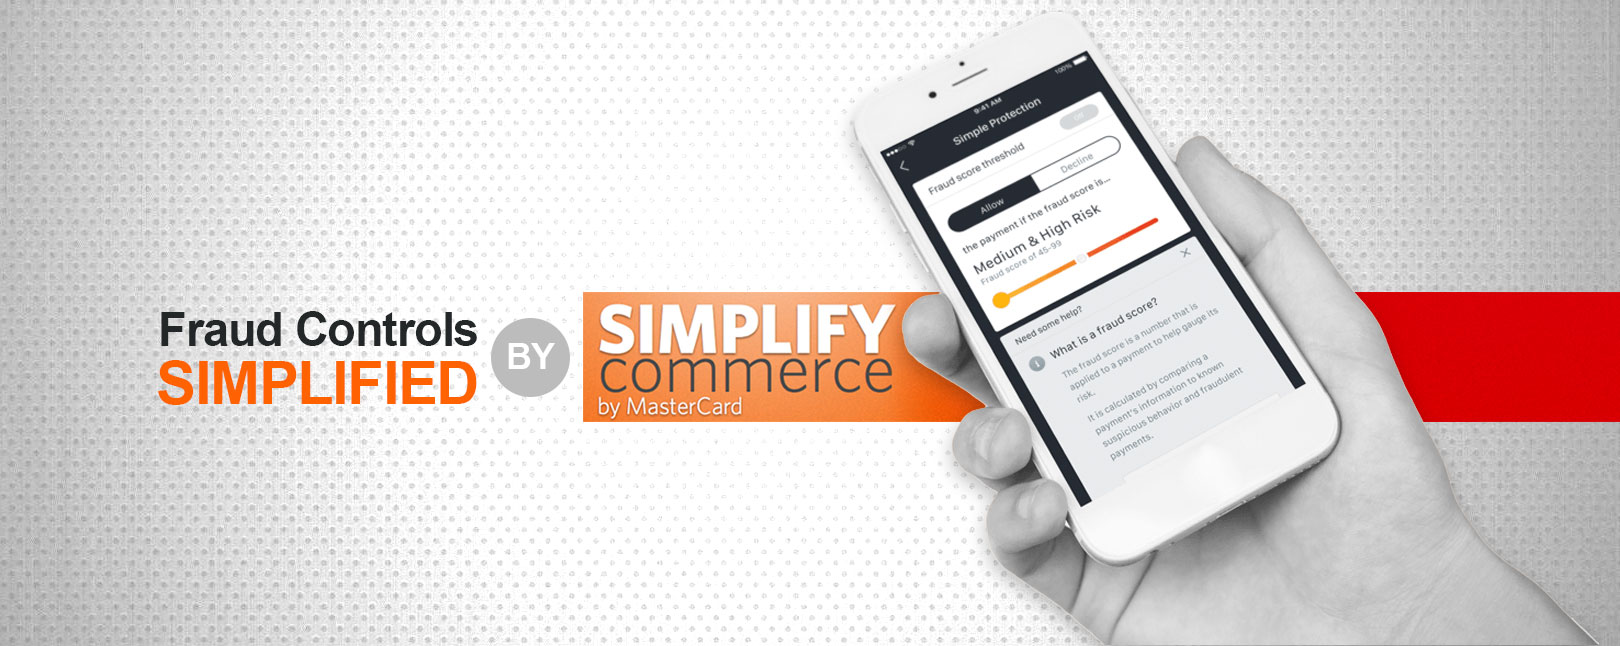 simplify commerce